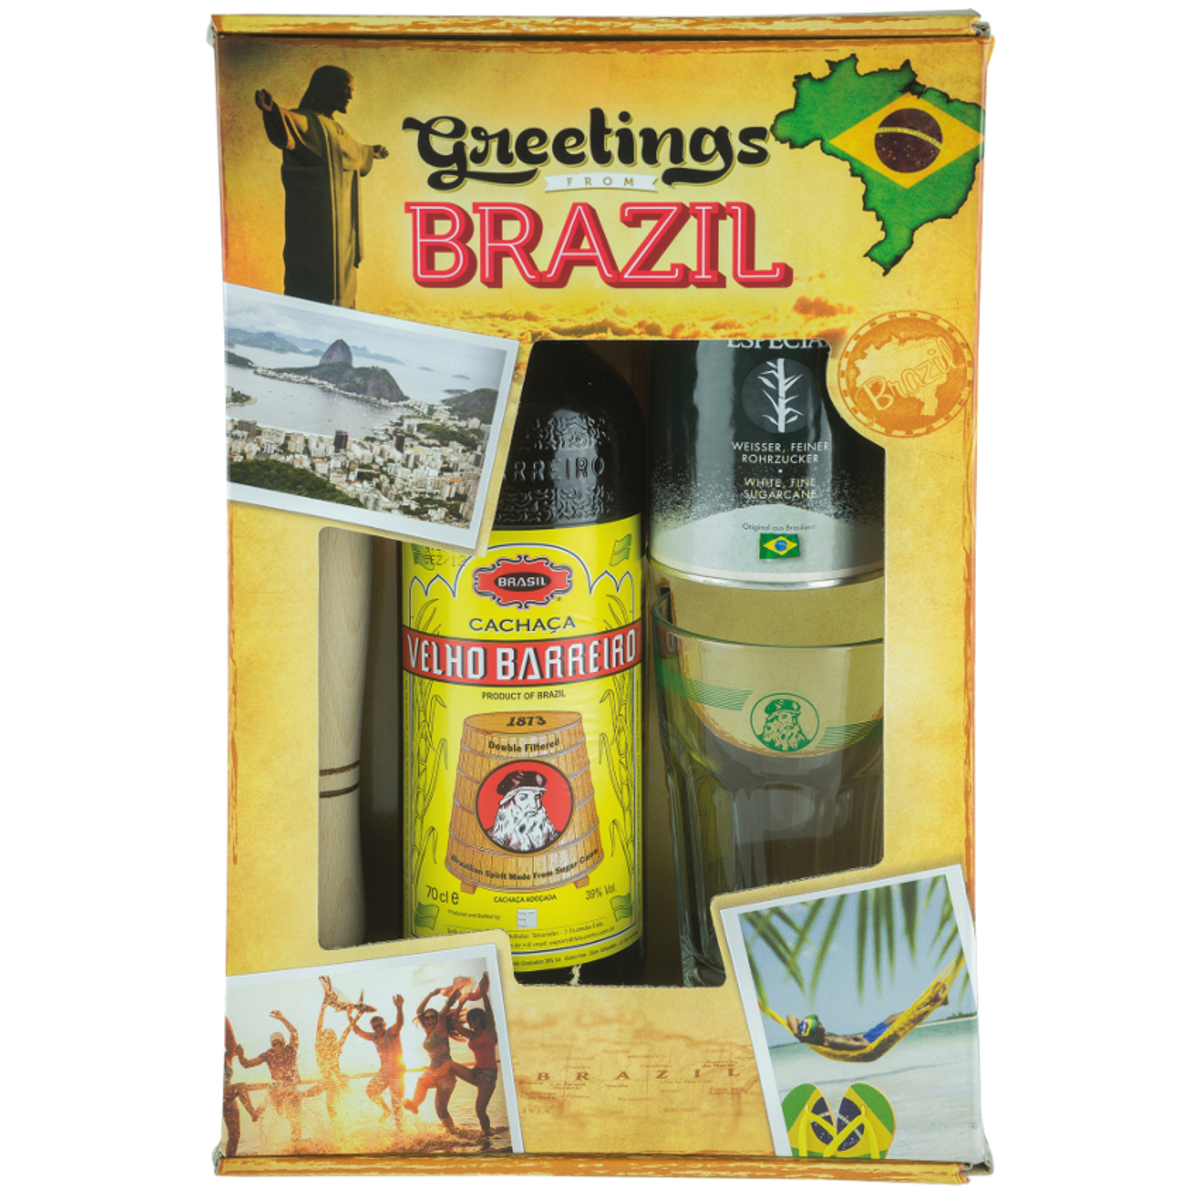 Velho Barreira "Greetings from Brazil" mit Stößel, Glas, Rohrzucker 0,7l 39%vol.